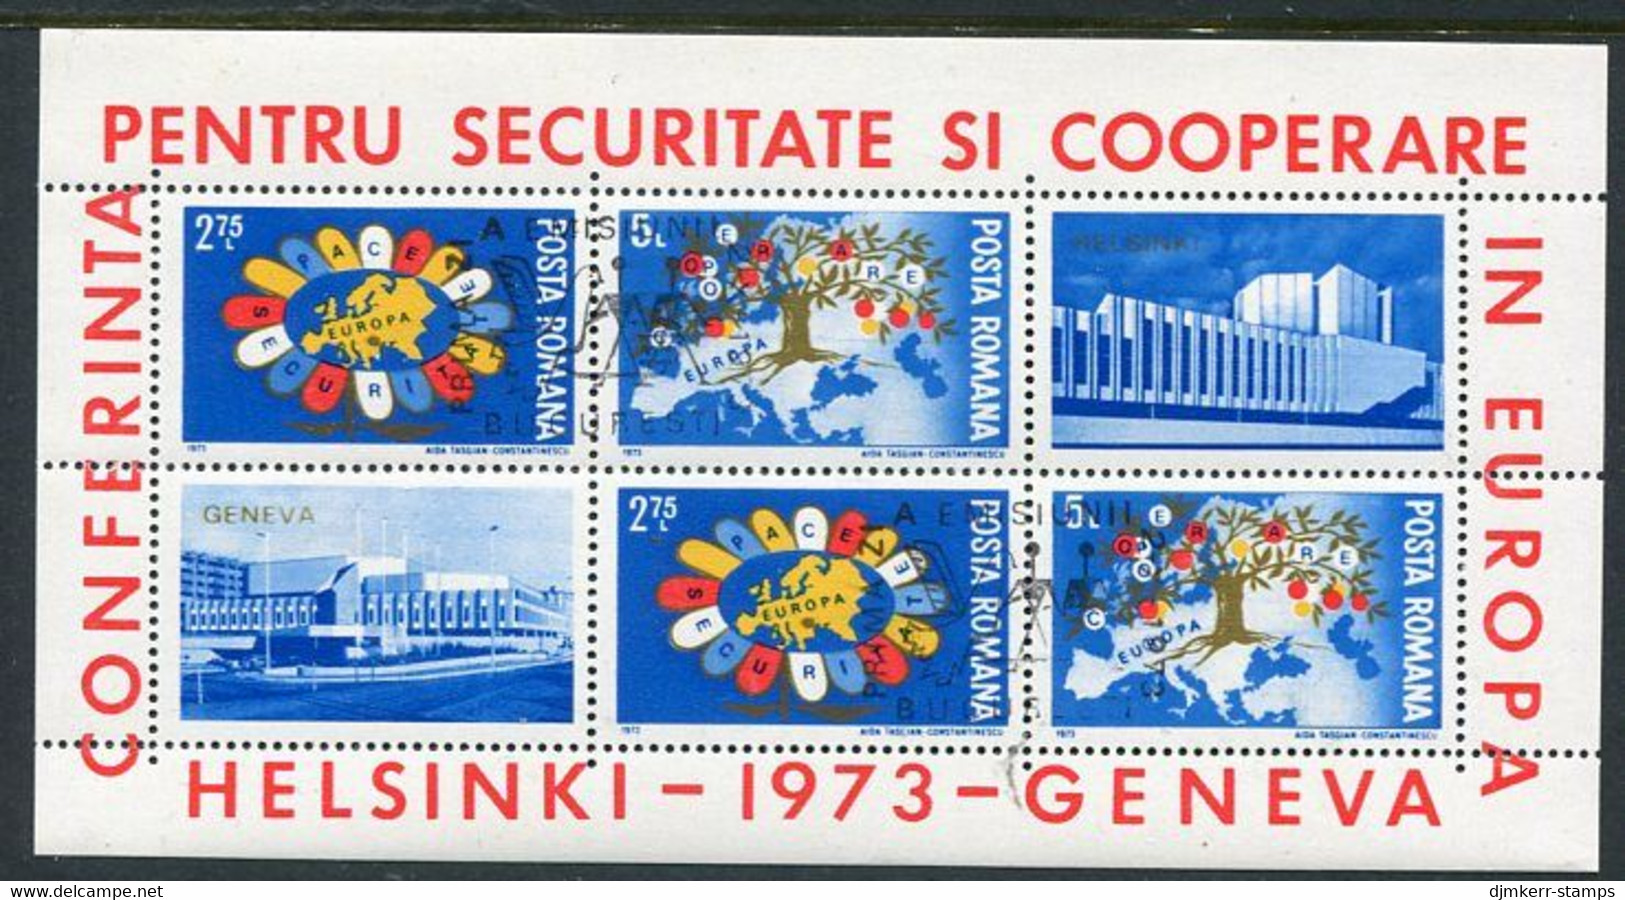 ROMANIA 1973 European Security Conference Block Used.  Michel Block 108 - Blocs-feuillets